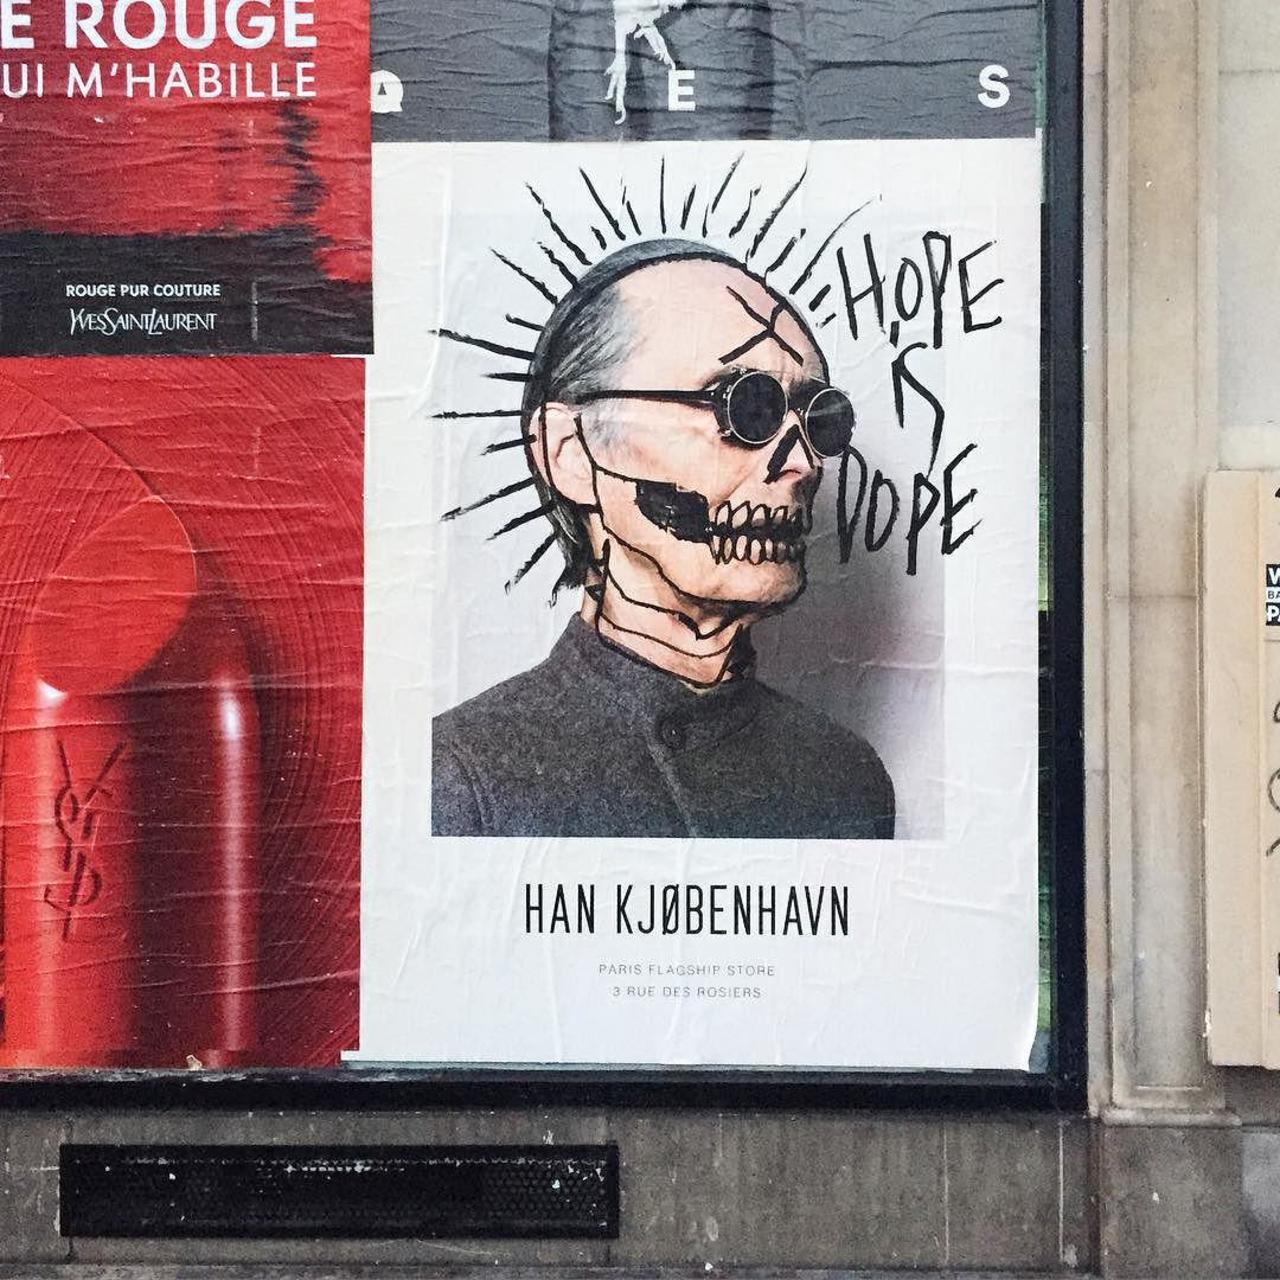 #Paris #graffiti photo by @hookedblog http://ift.tt/1QXrGhu #StreetArt http://t.co/D46TbnZJ4E